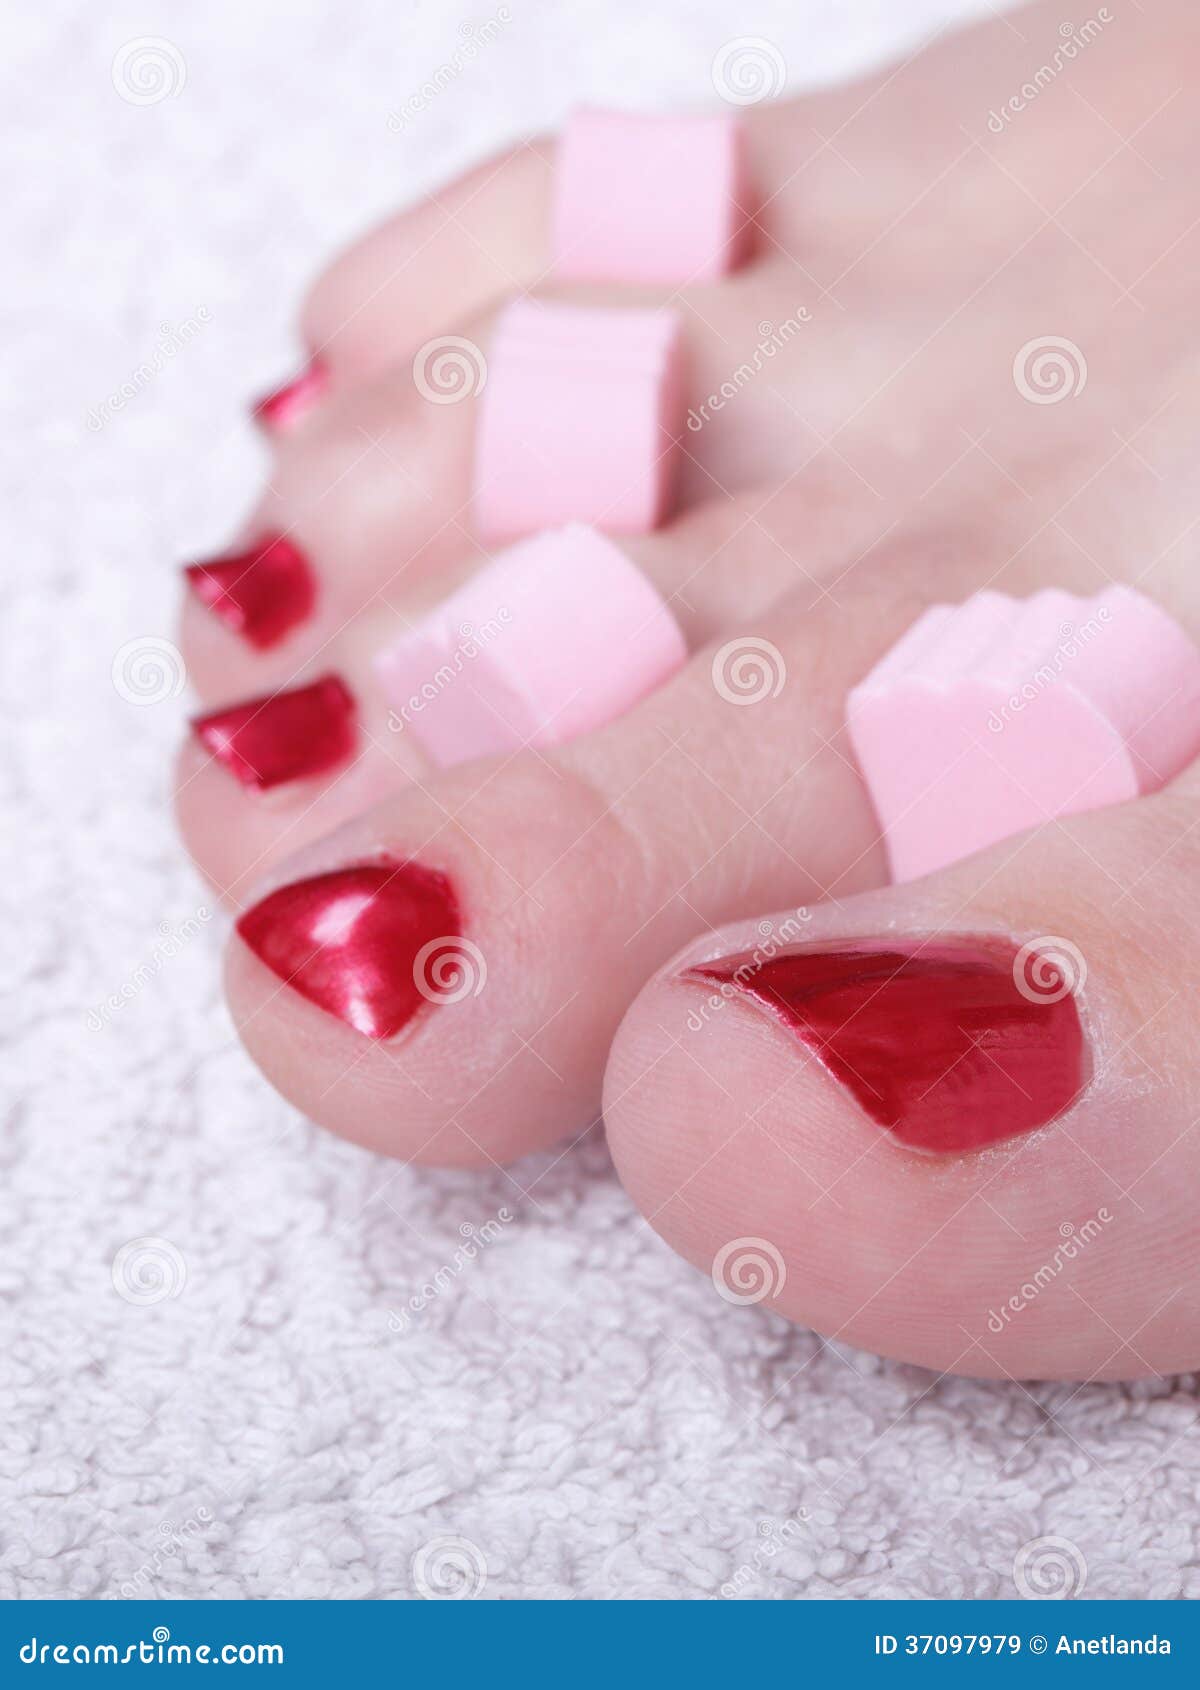 Female Feet Red Polished Nails Stock Image - Image of detail, enamel ...